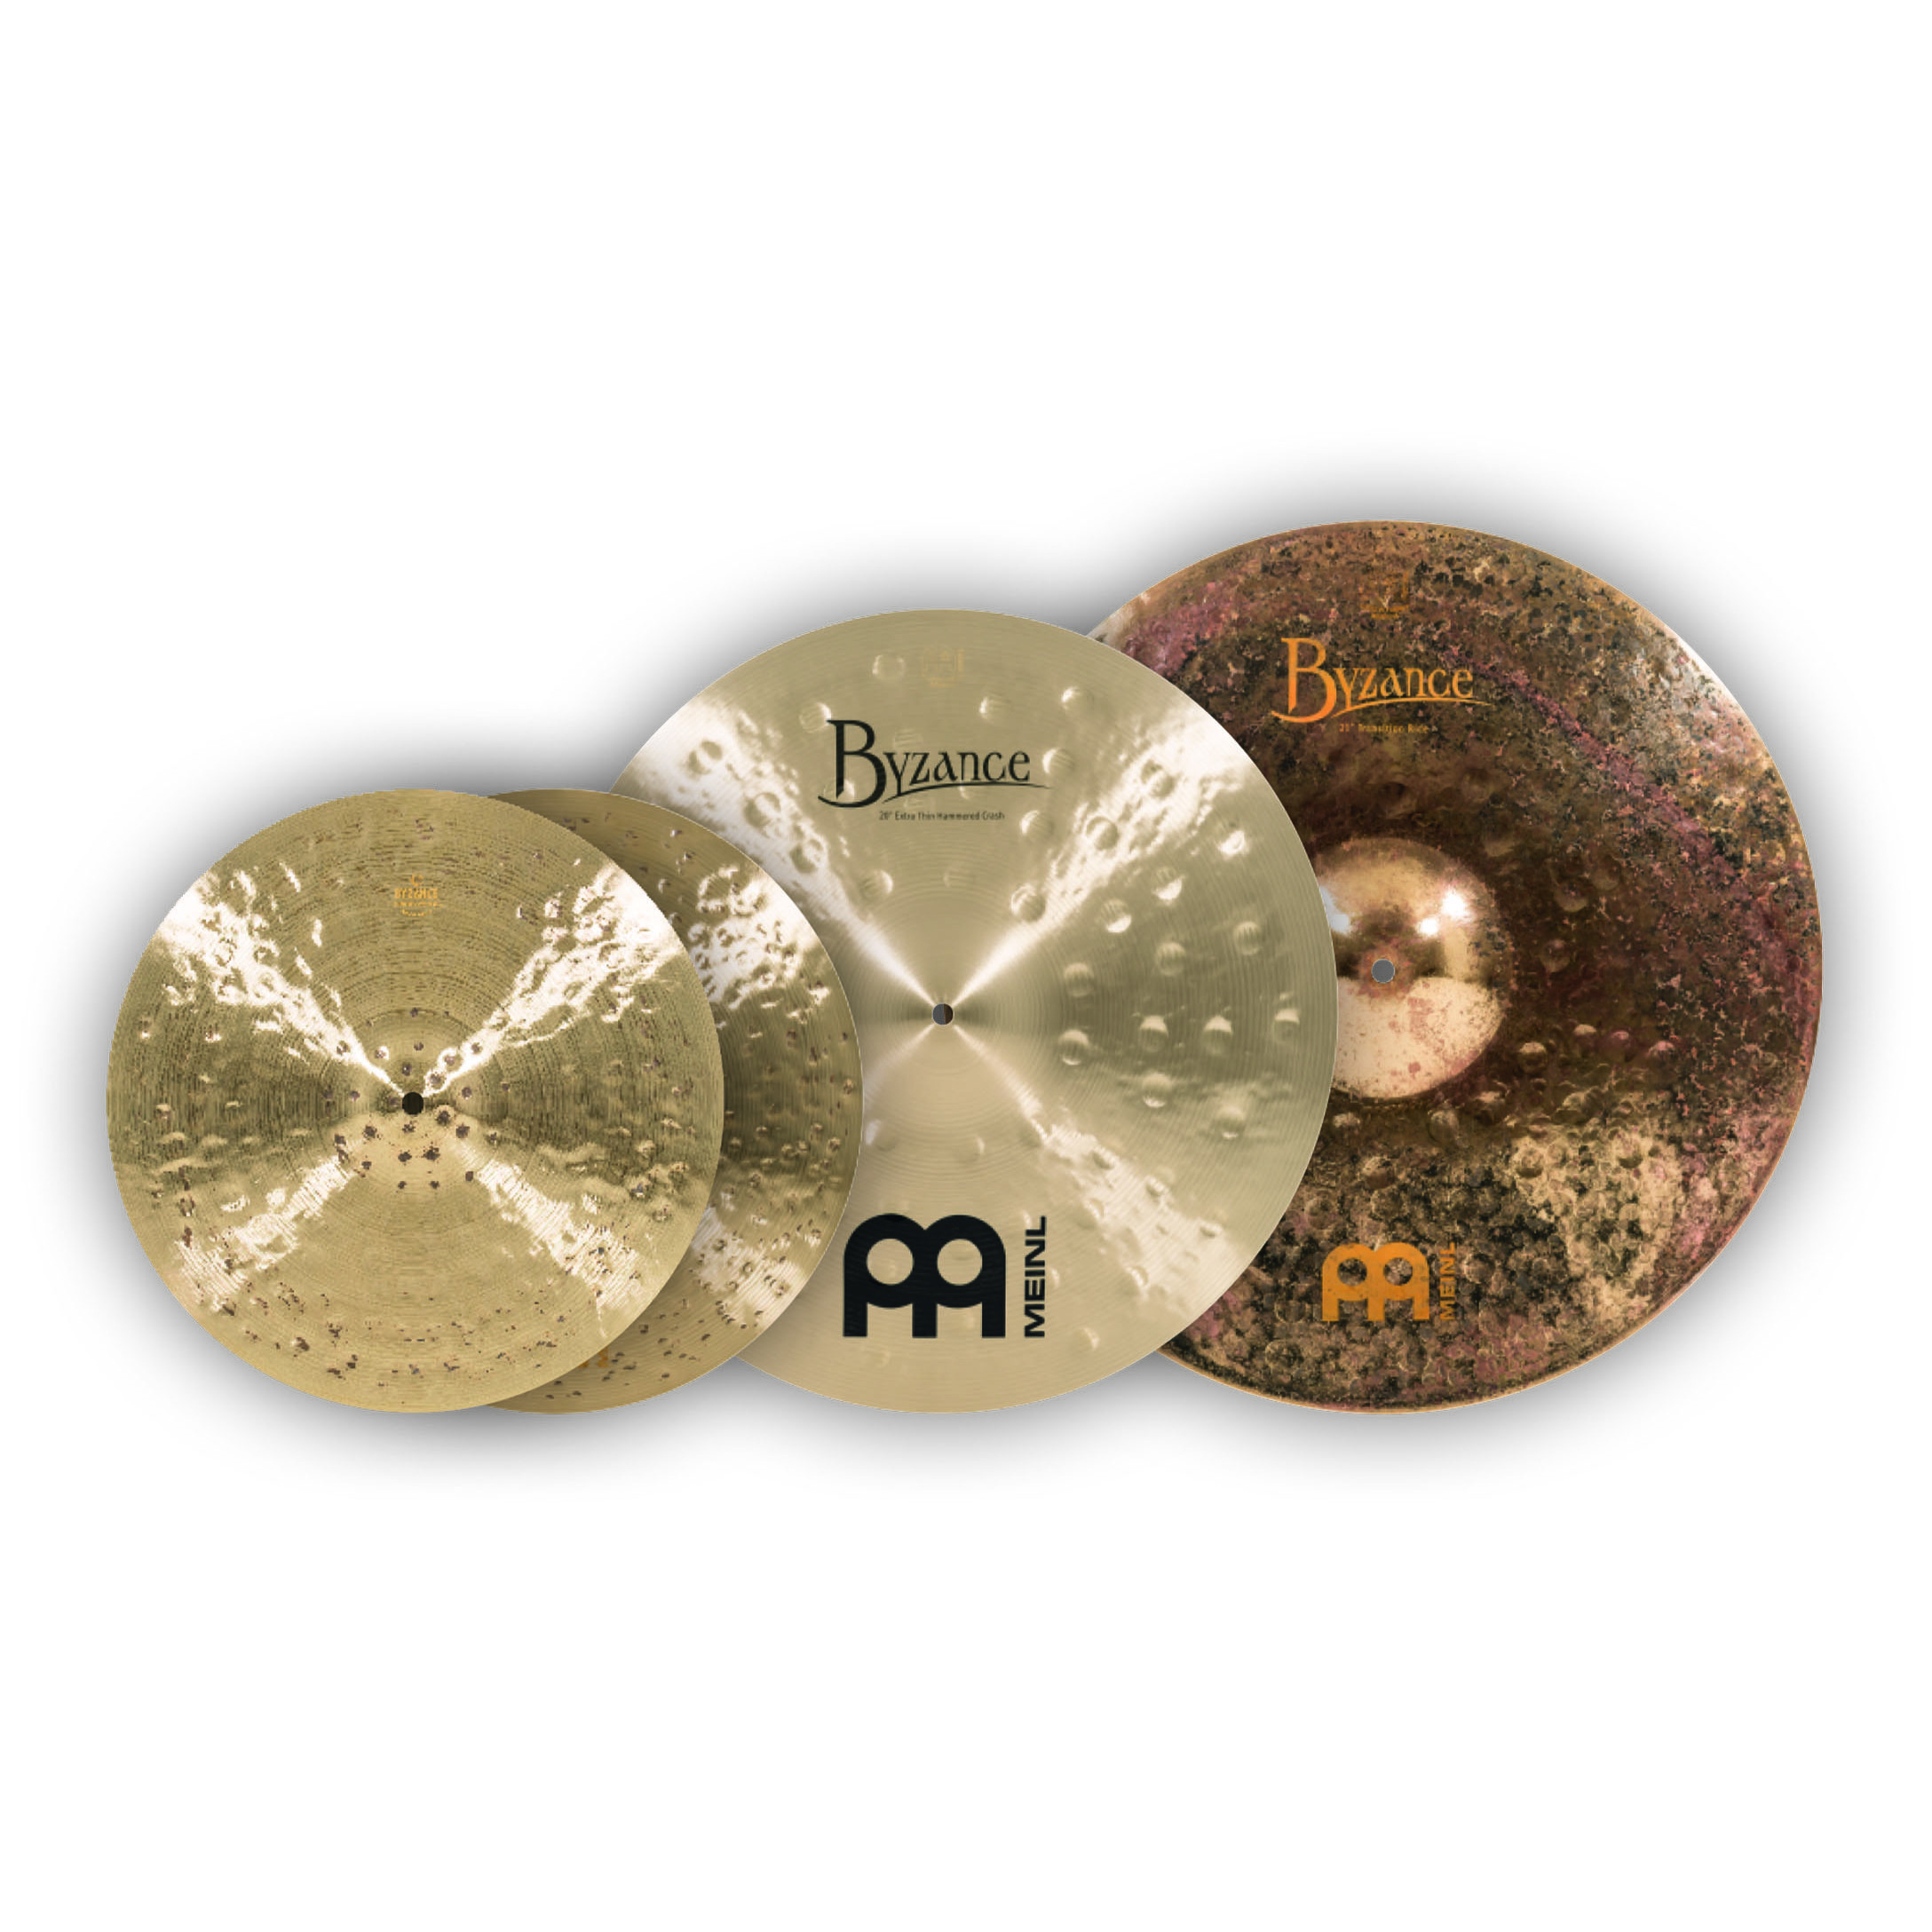 Meinl Cymbals A-CS6 - Byzance Artist's Choice Cymbal Set: Mike Johnston 1